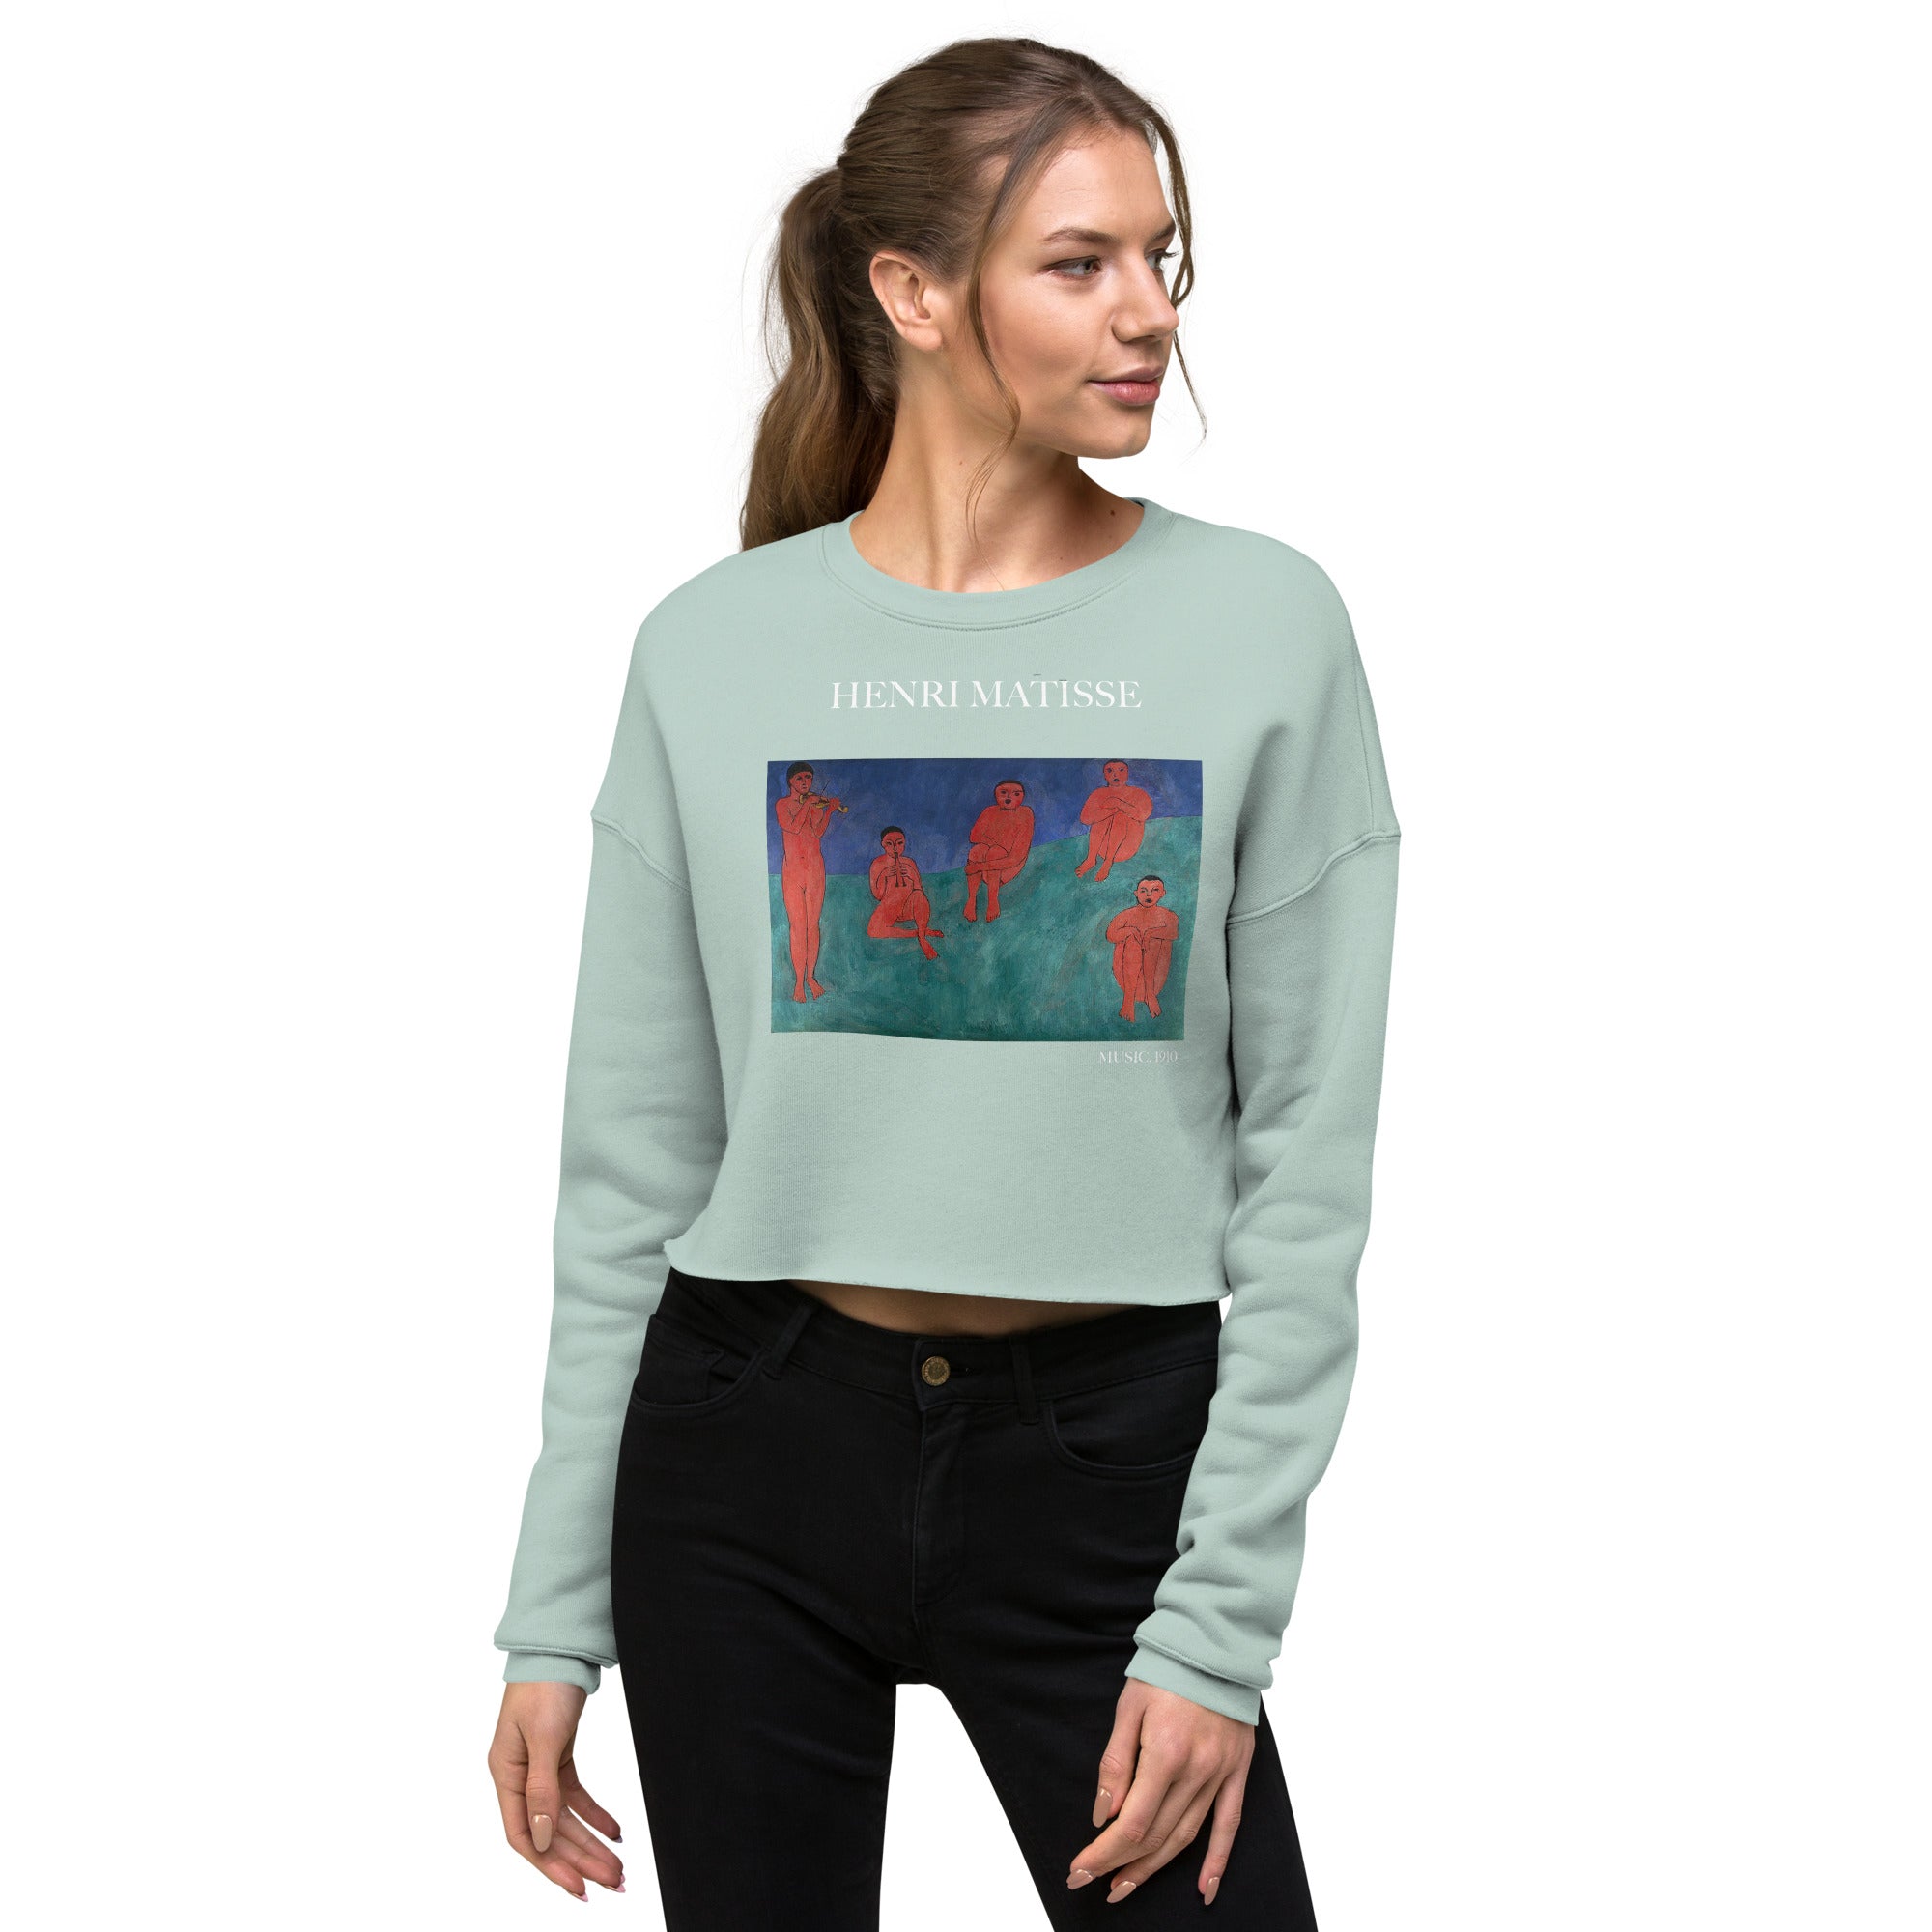 Henri Matisse 'Music' Famous Painting Cropped Sweatshirt | Premium Art Cropped Sweatshirt